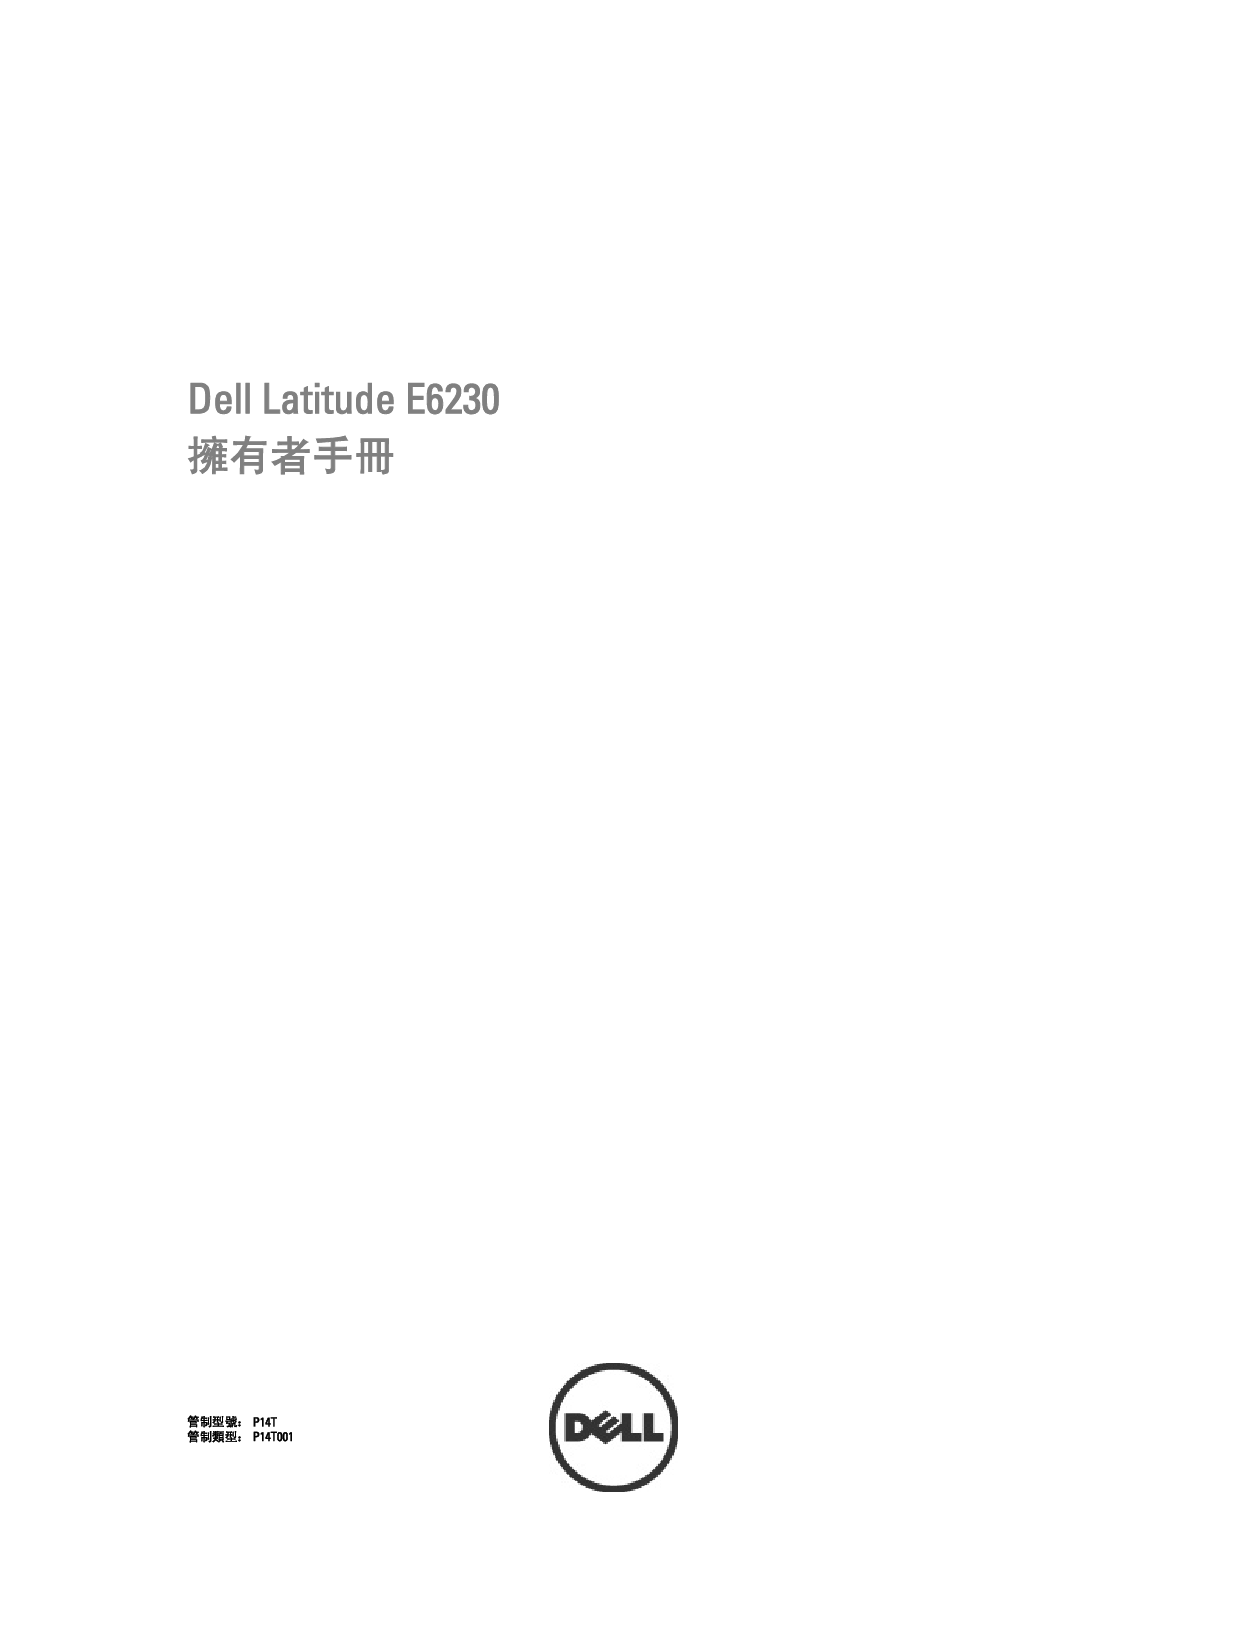 戴尔 Dell Latitude E6230 繁体 用户手册 封面